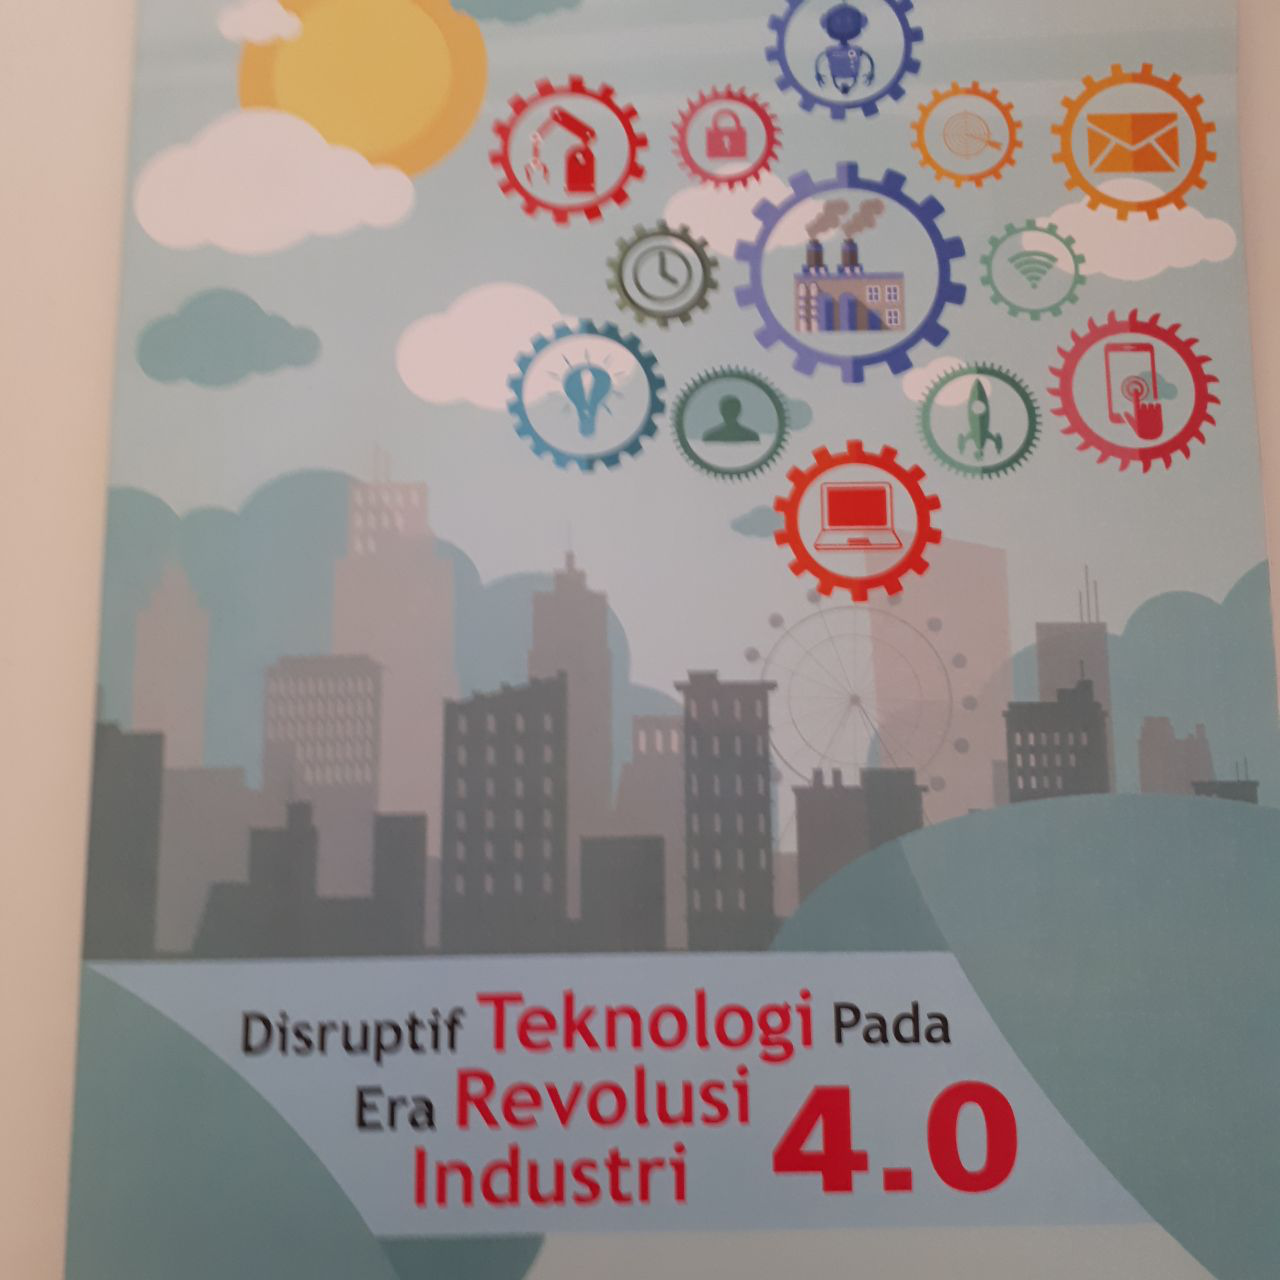 Disruptive Technology: industry 4.0